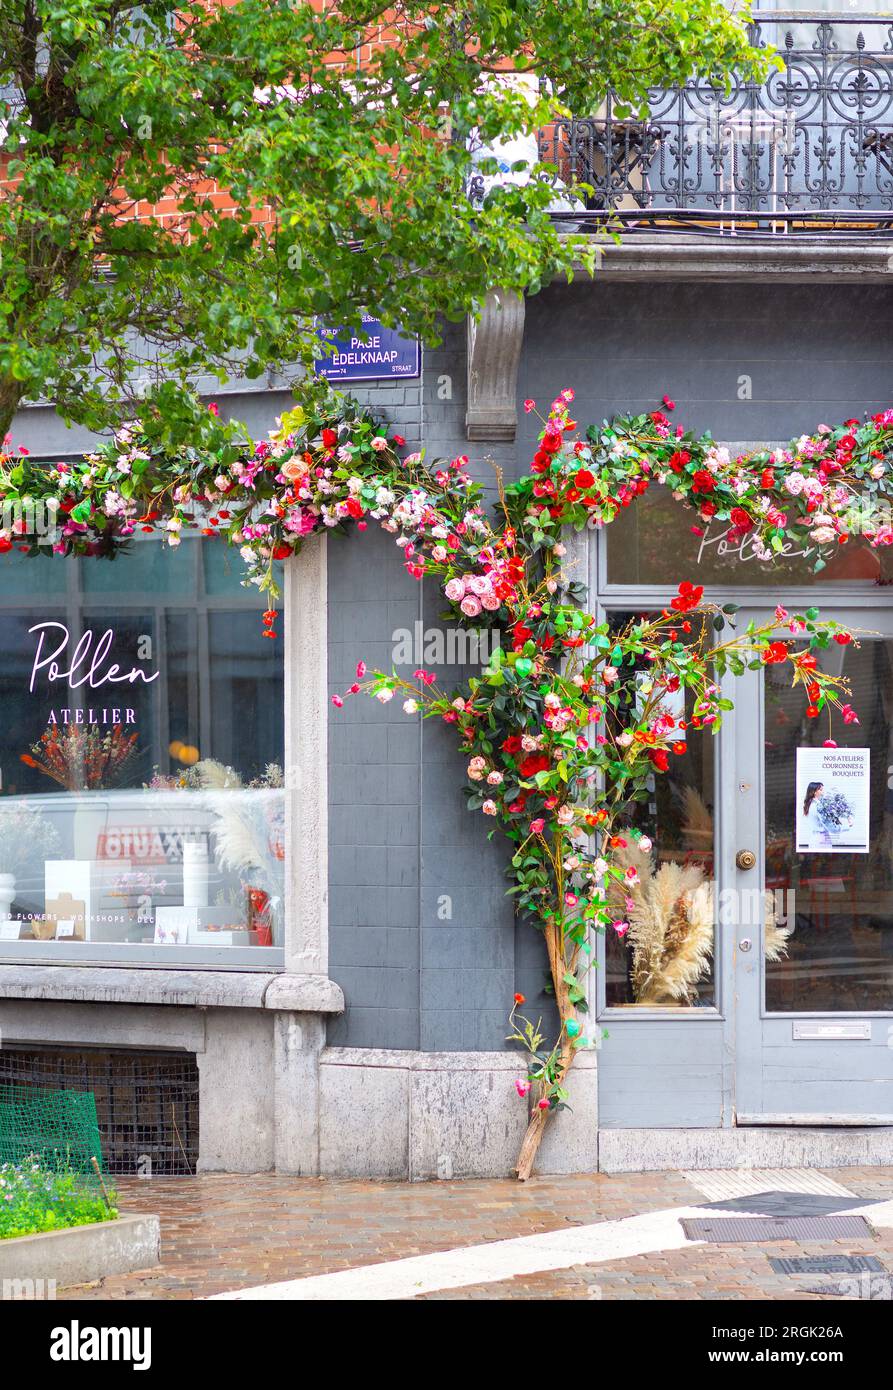 Artificial flowers decorating front entrance of 'Pollen Atelier' in Ixelles, Brussels, Belgium. Stock Photo